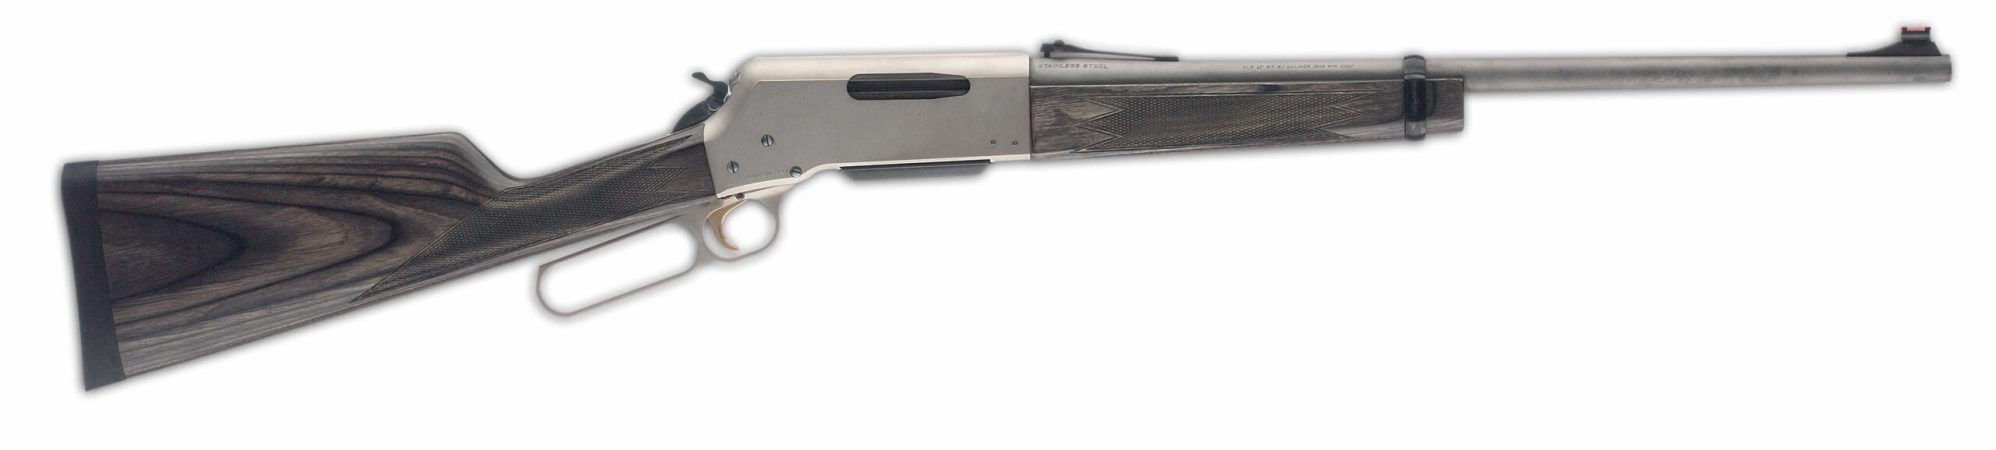 Stainless Browning BLR M81 Takedown